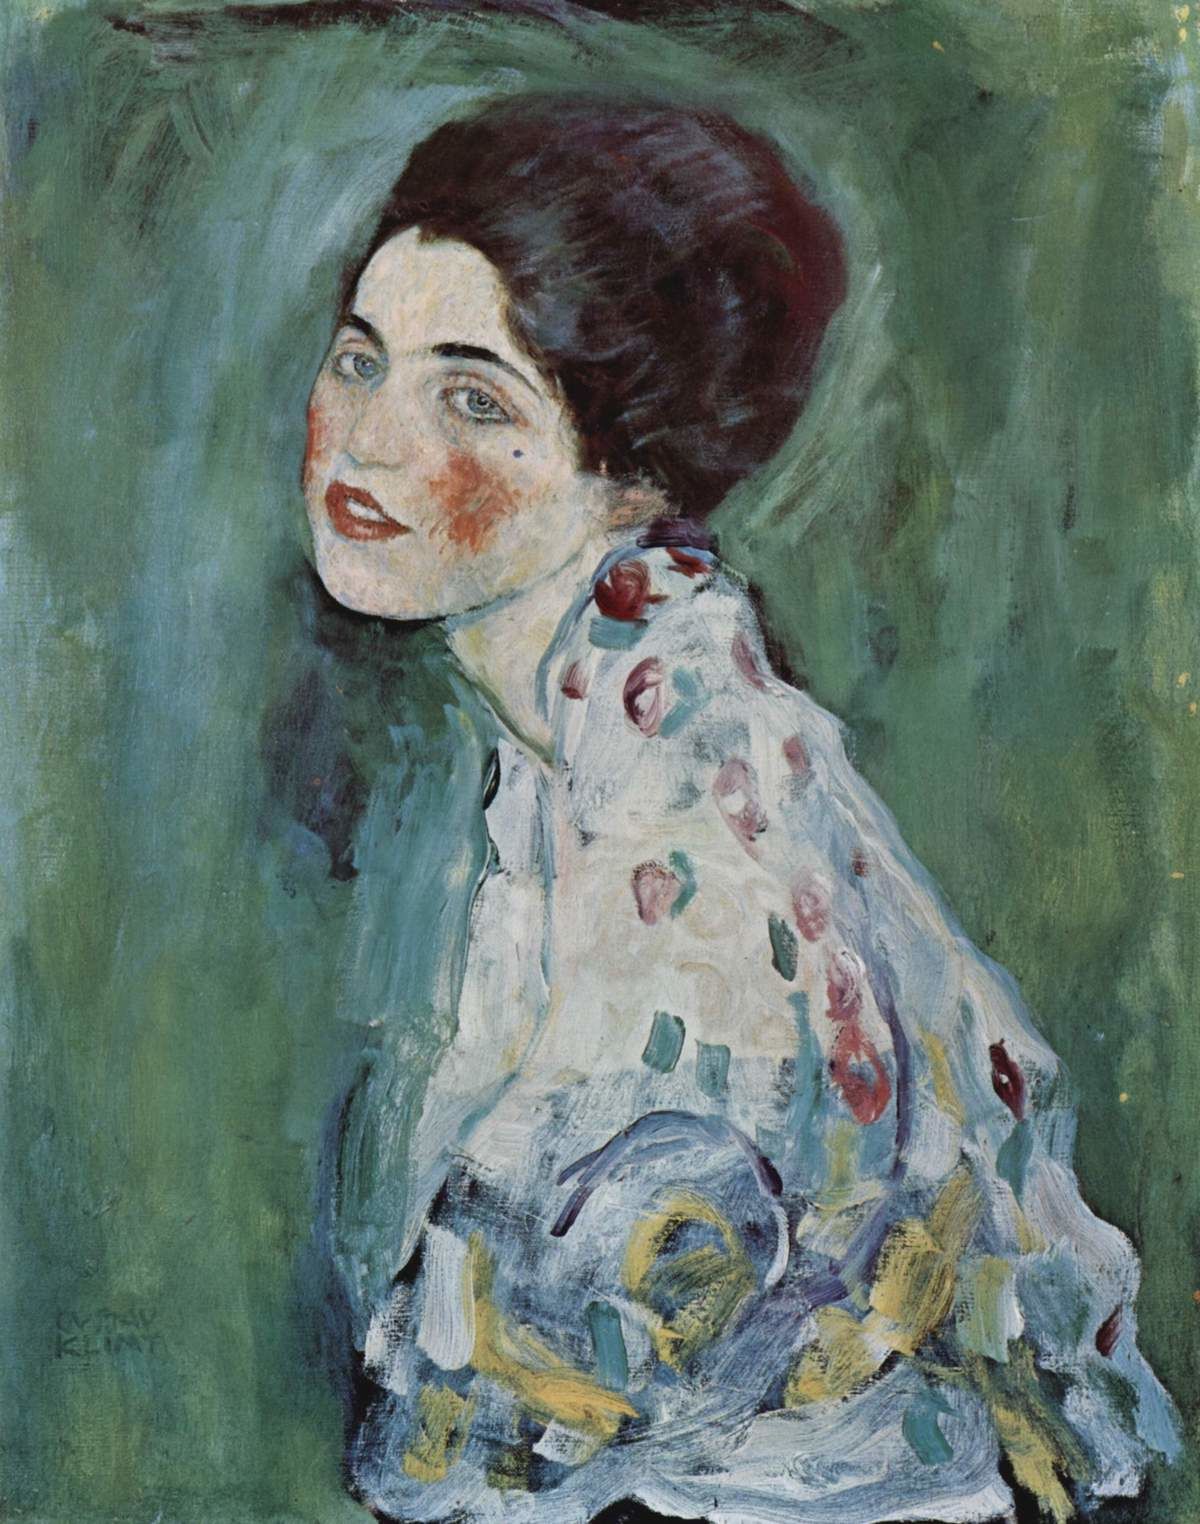 portrait of a lady by Gustav Klimt found in Italy